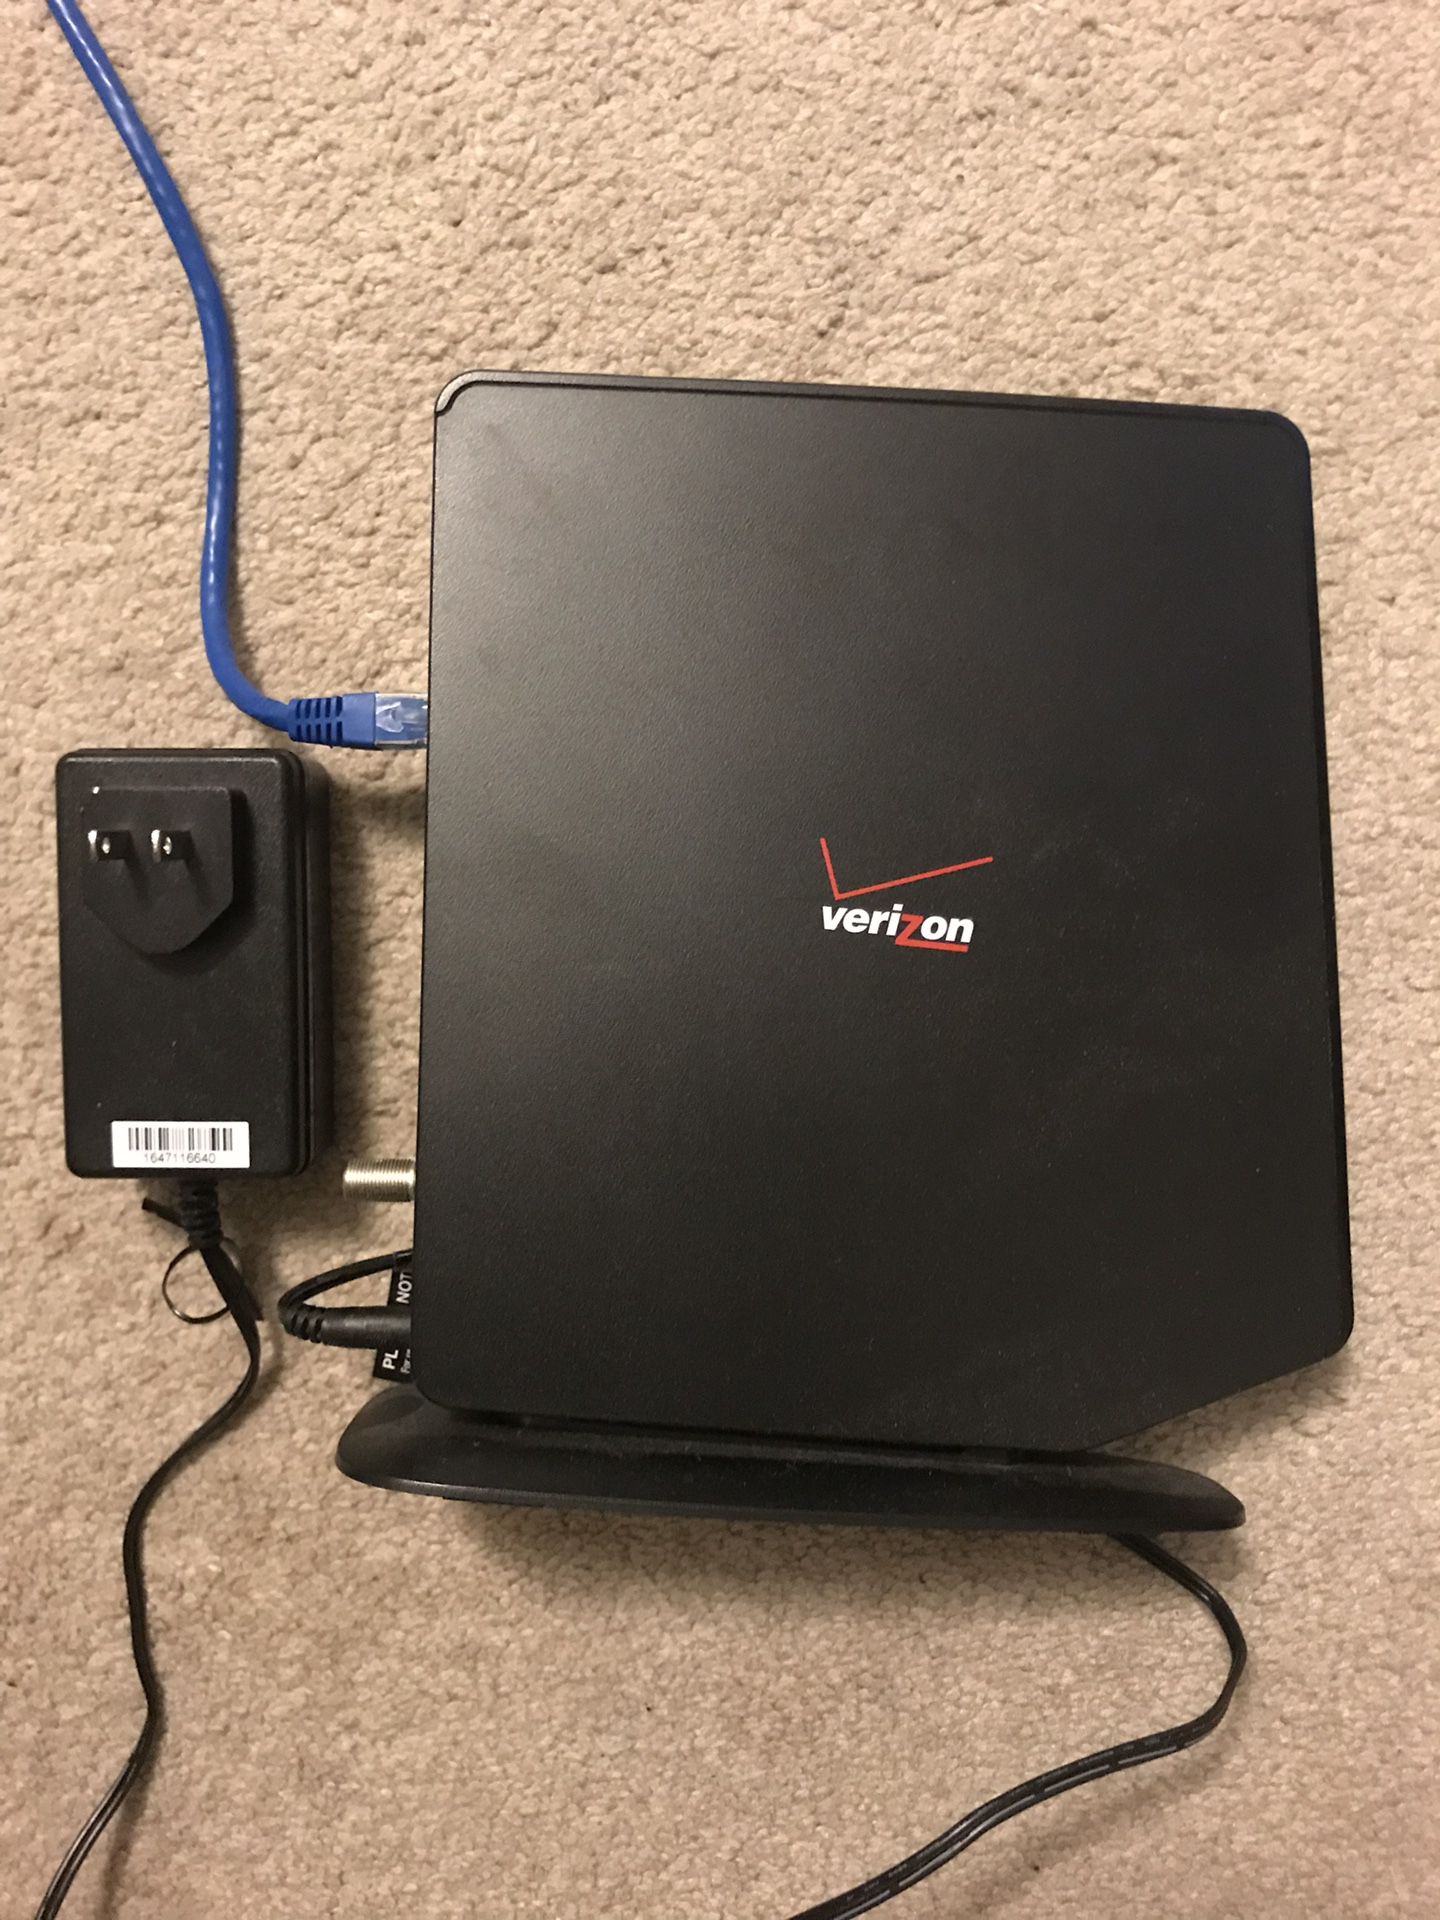 Verizon router